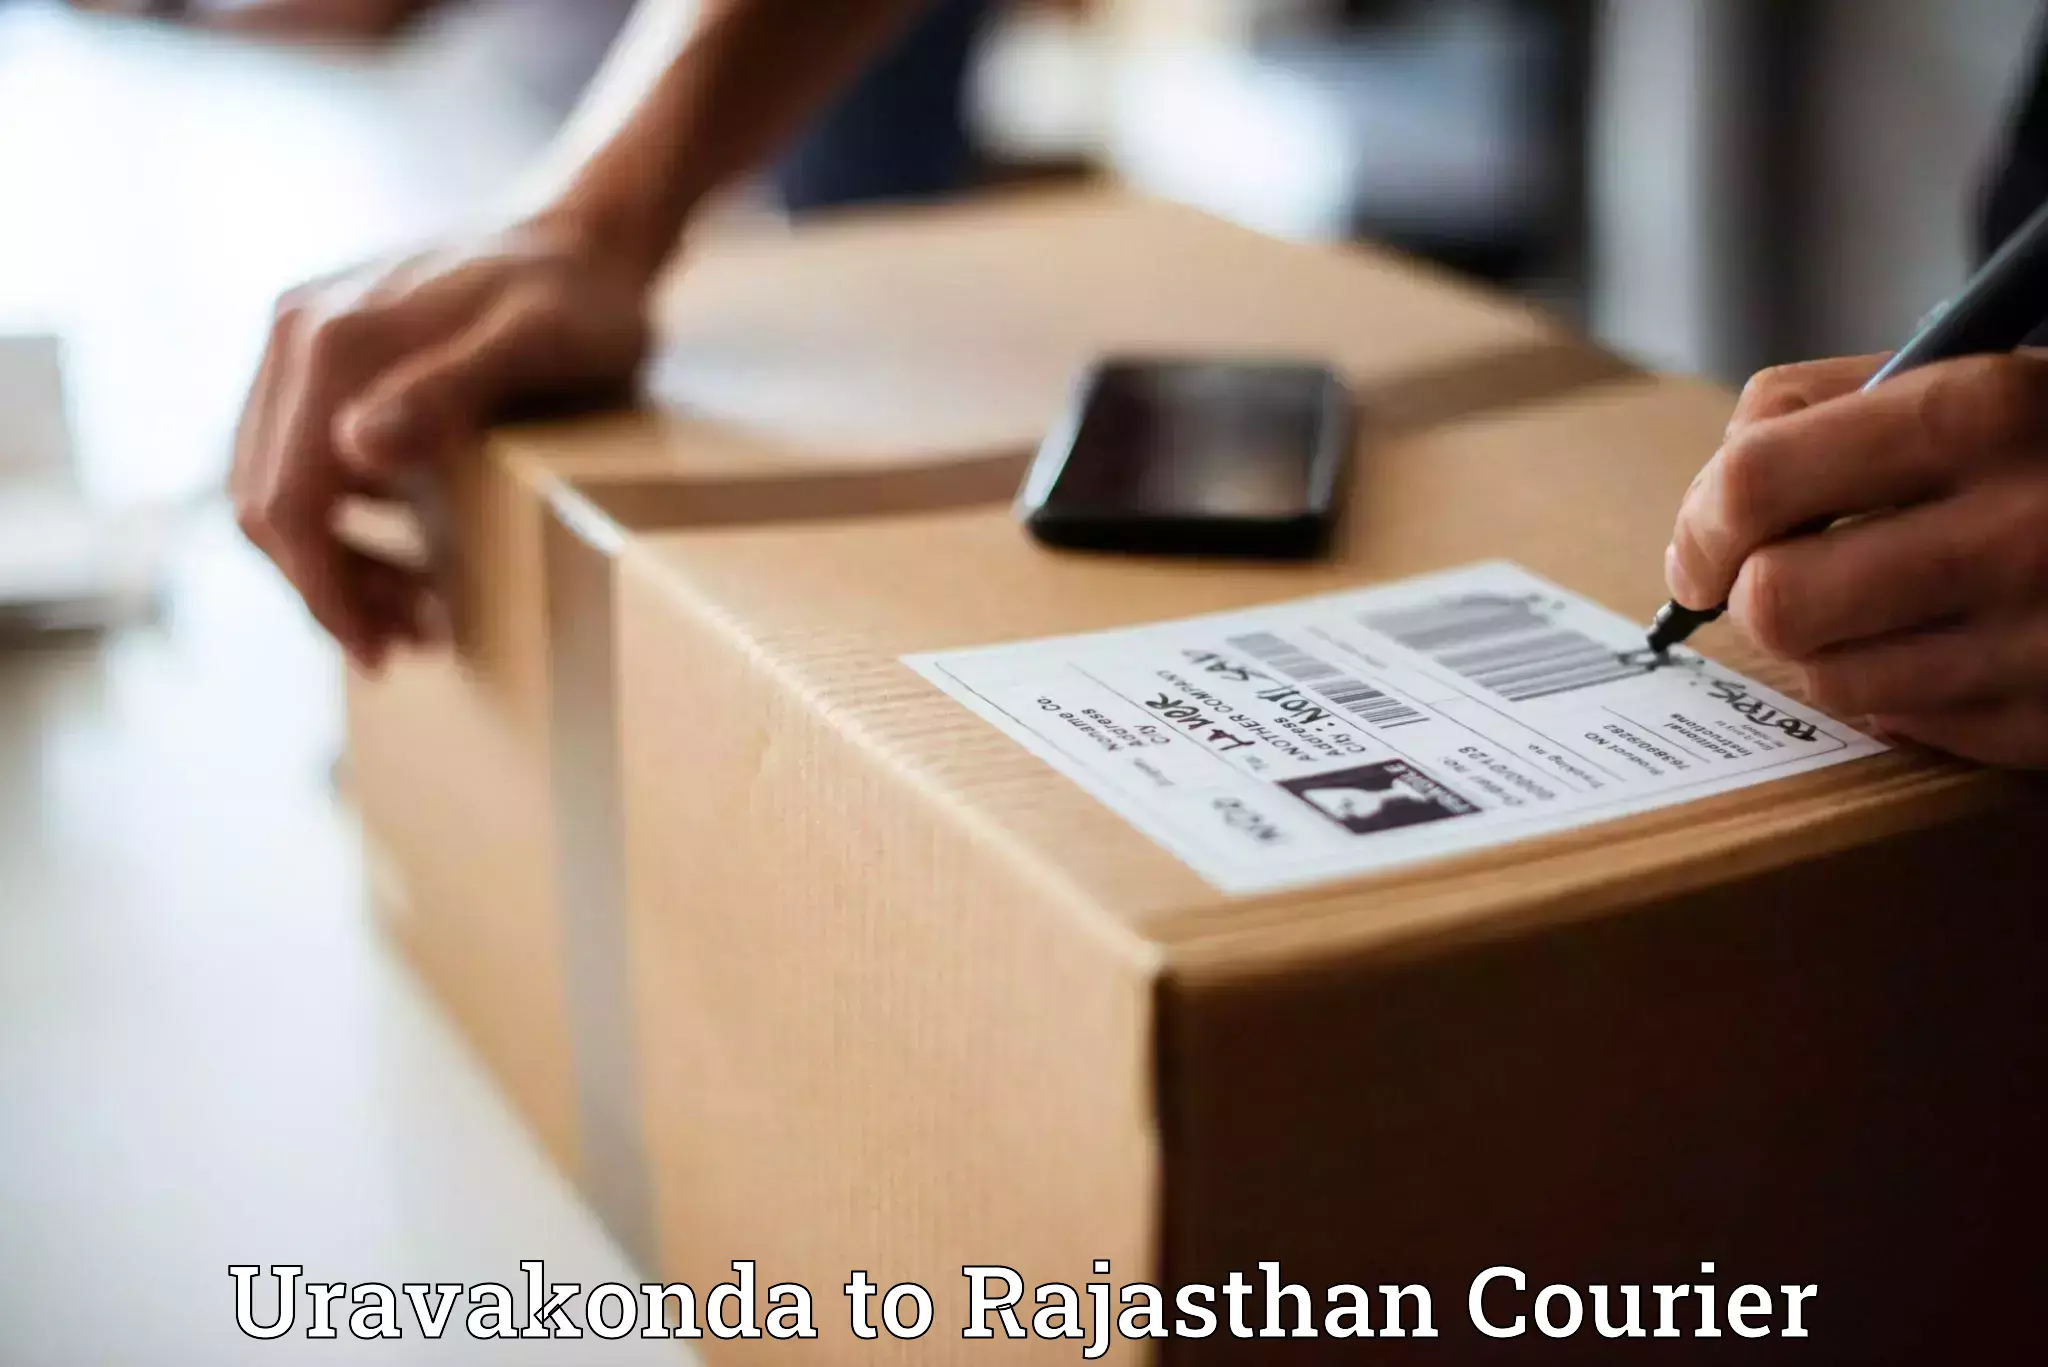 Reliable delivery network Uravakonda to Neem ka Thana